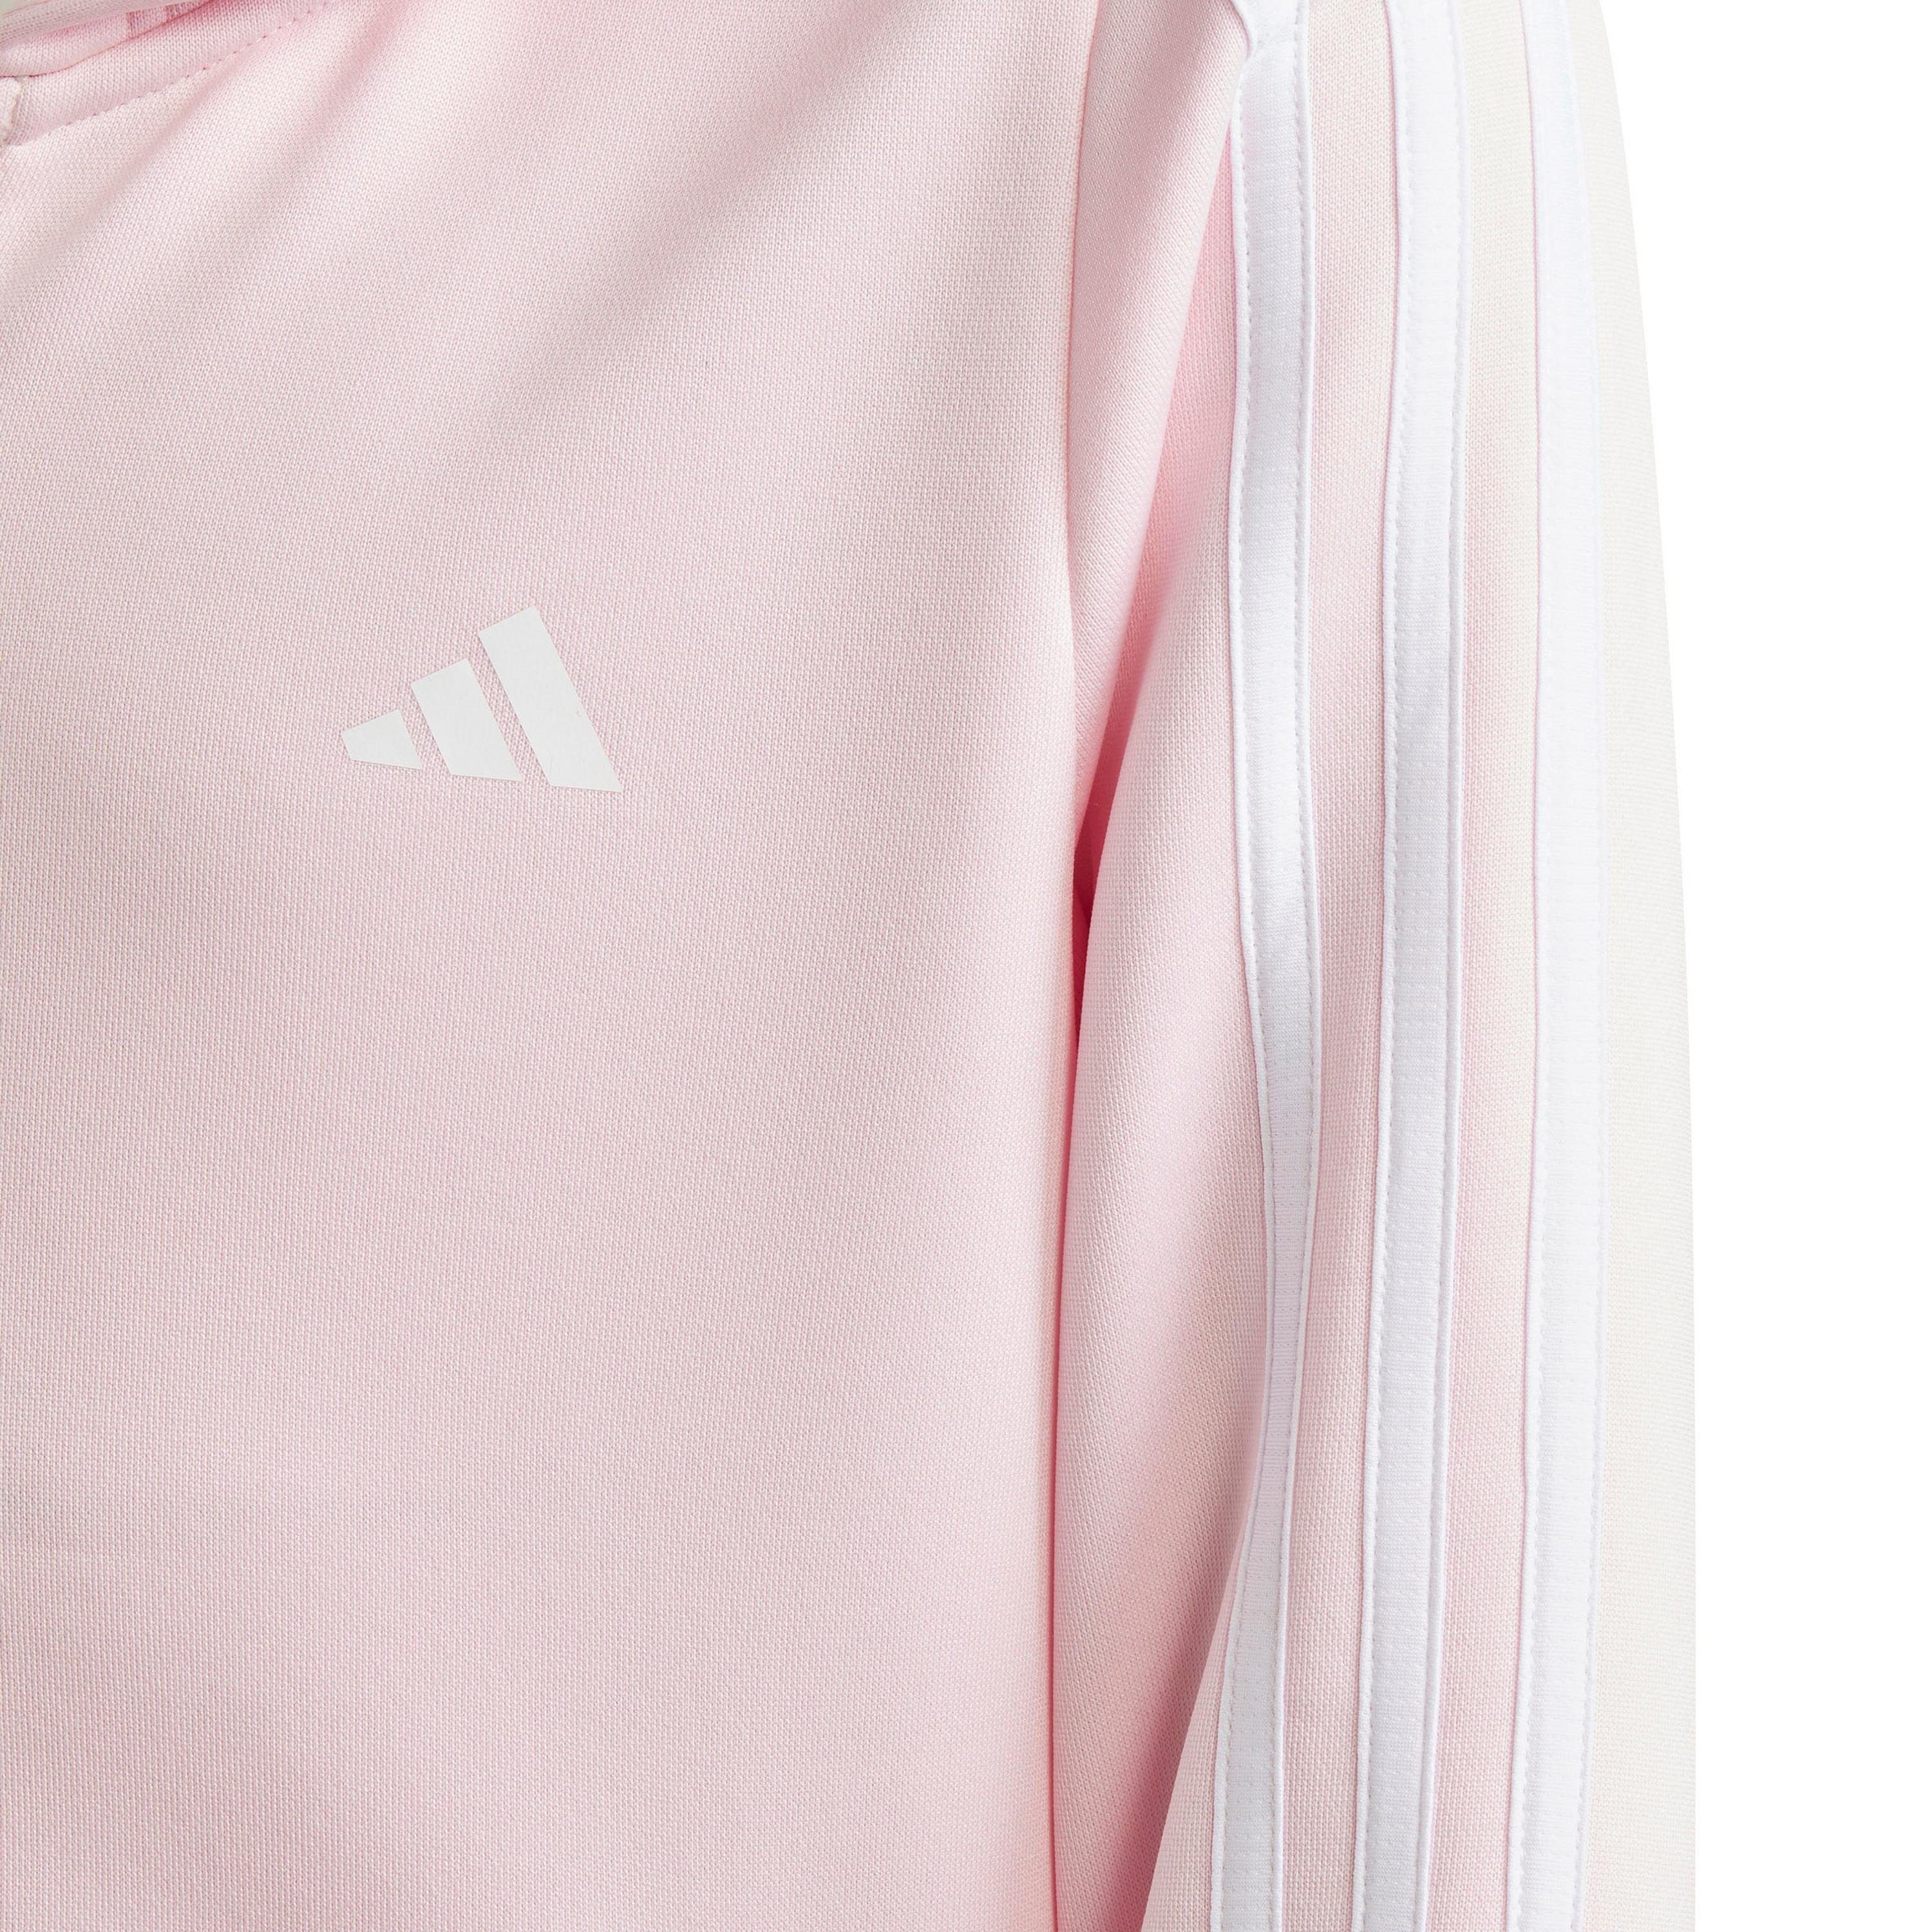 Performance Trainingsjacke pink-white adidas clear